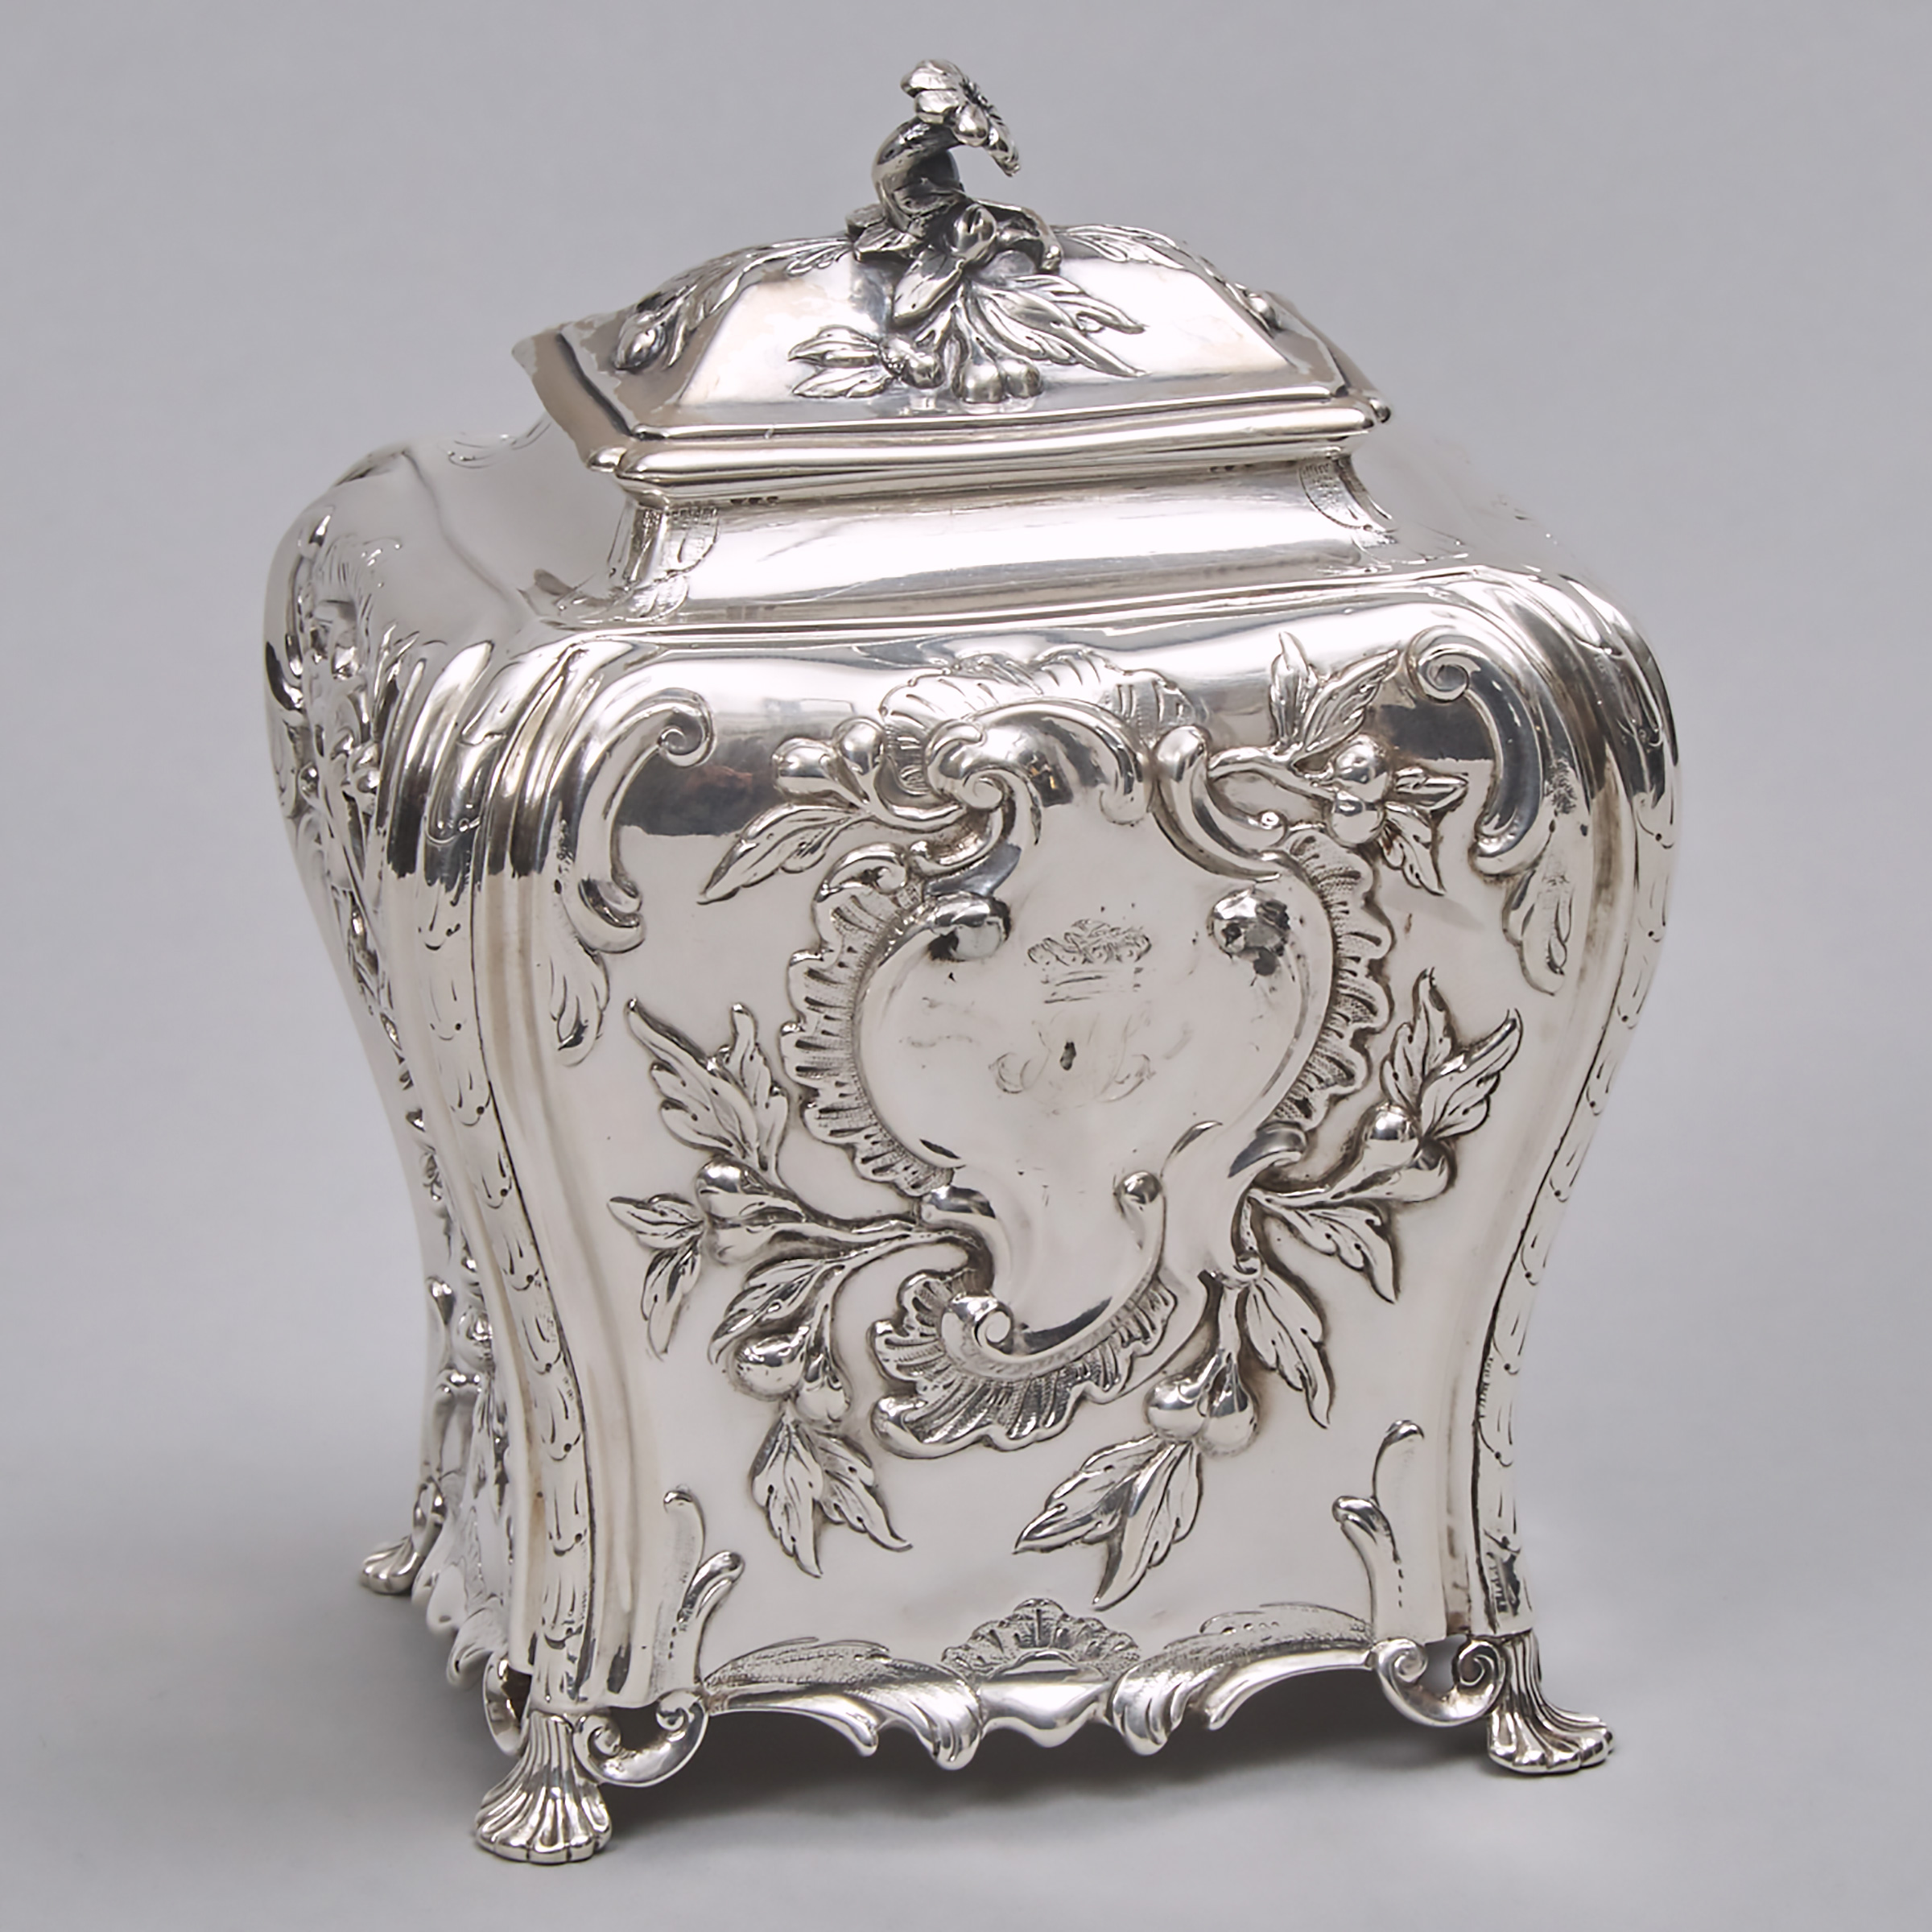 George III Silver Tea Caddy, of Canadian interest, Robert Cruickshank, London, 1766